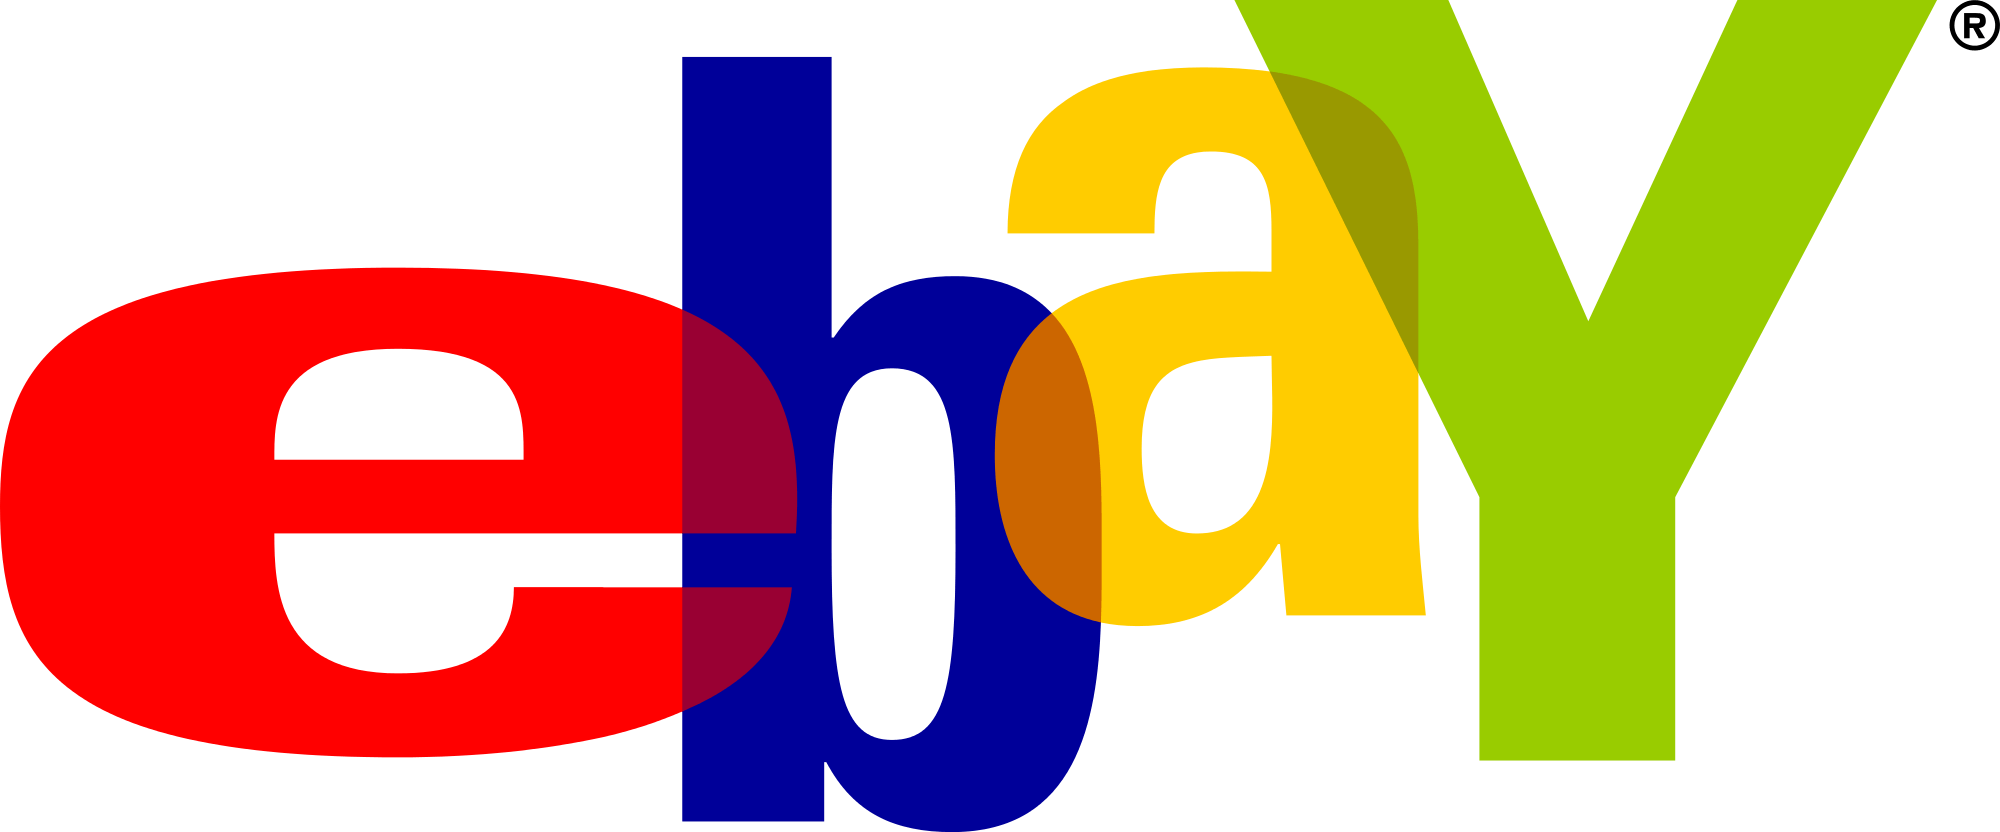 eBay Inc. Logo - eBay Inc (NASDAQ:EBAY) Founder Omidyar Leaves PayPal Holdings Inc